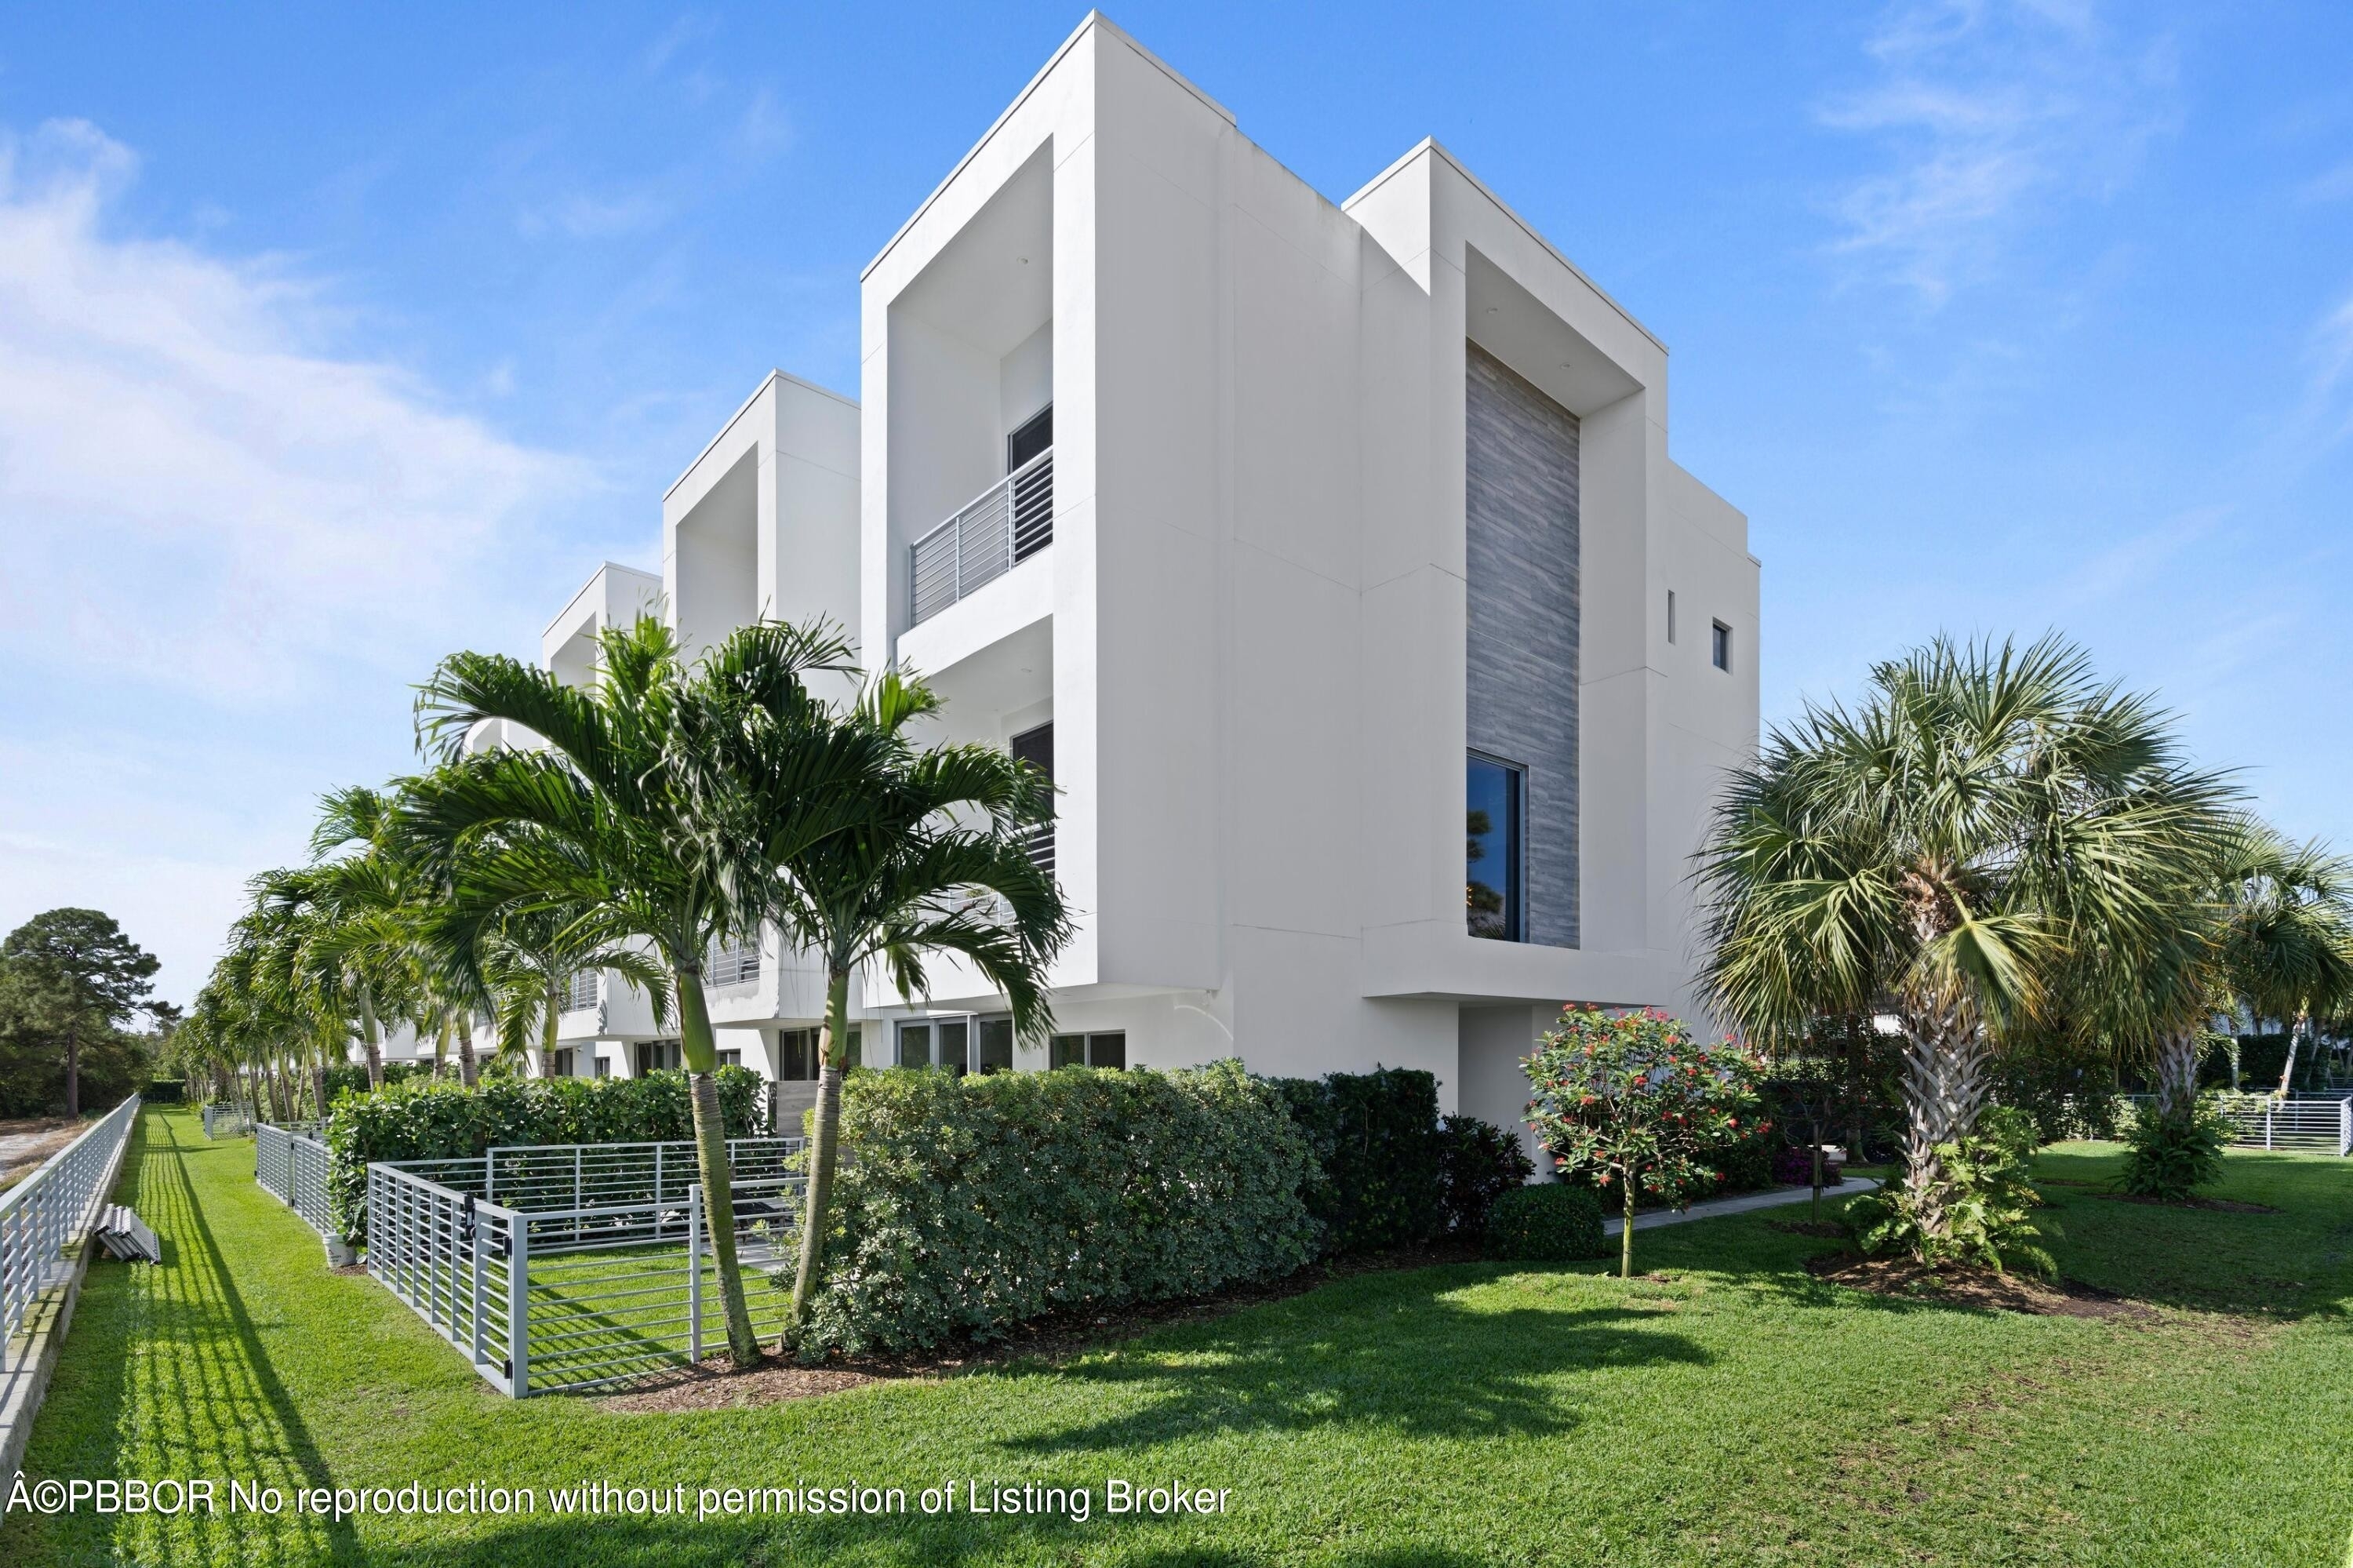 Property at Blue Lakes, Boca Raton, FL 33431